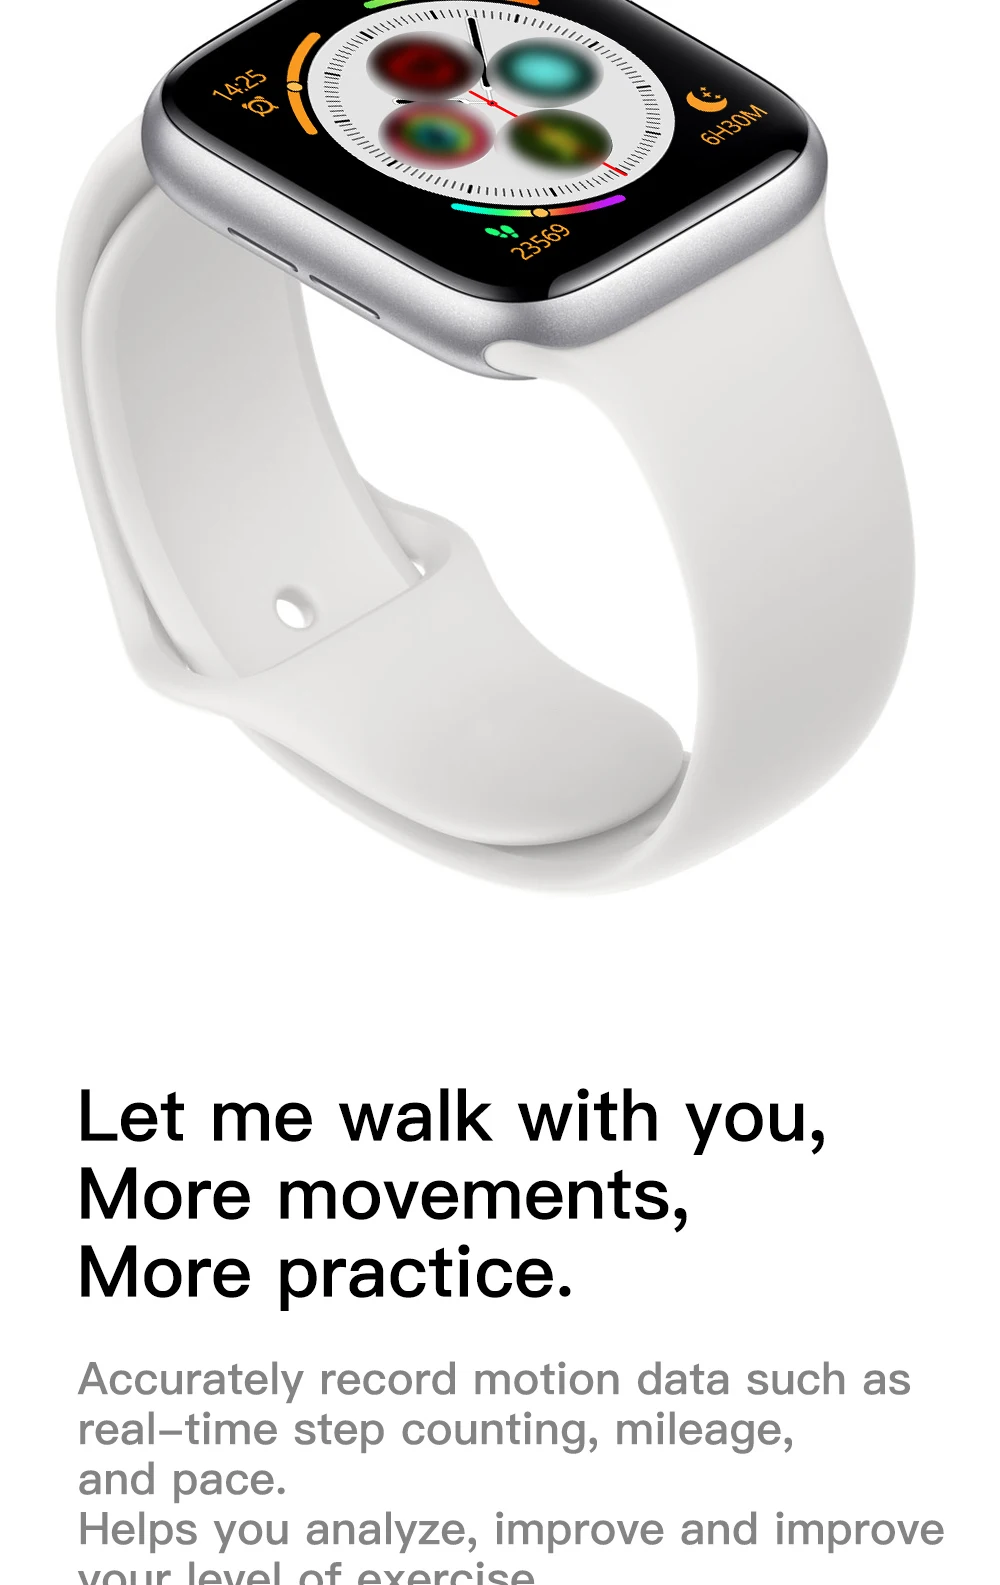 Часы серии 5 IWO 12 Bluetooth Смарт часы 1:1 44 мм 40 мм Чехол спортивные Смарт часы для iPhone Android телефон PK IWO 11